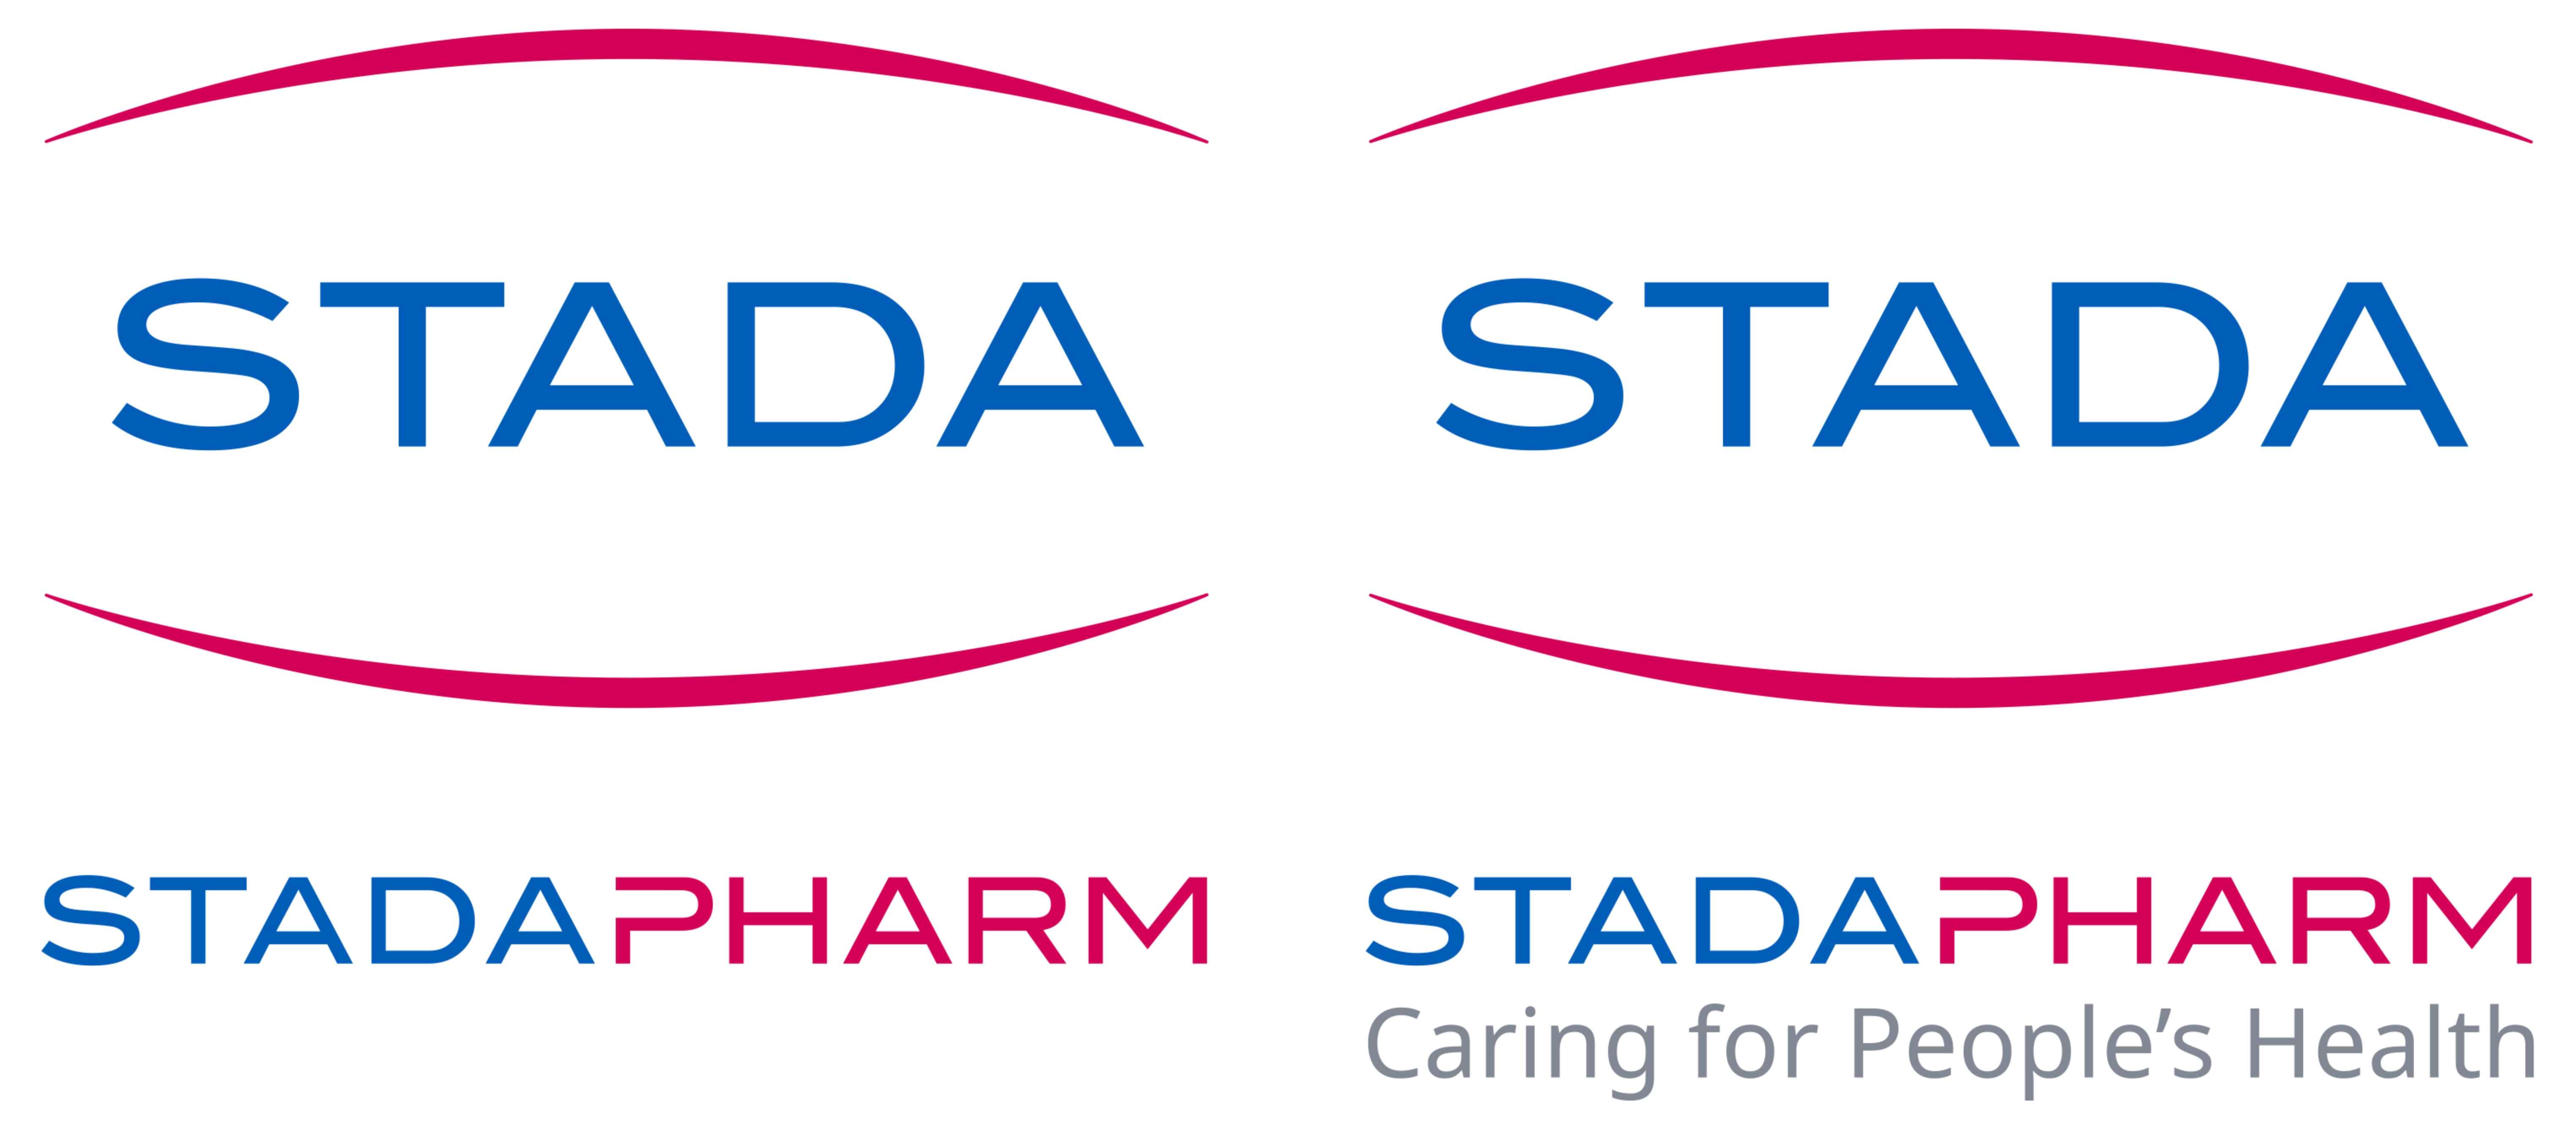 Stadapharm (Logos)